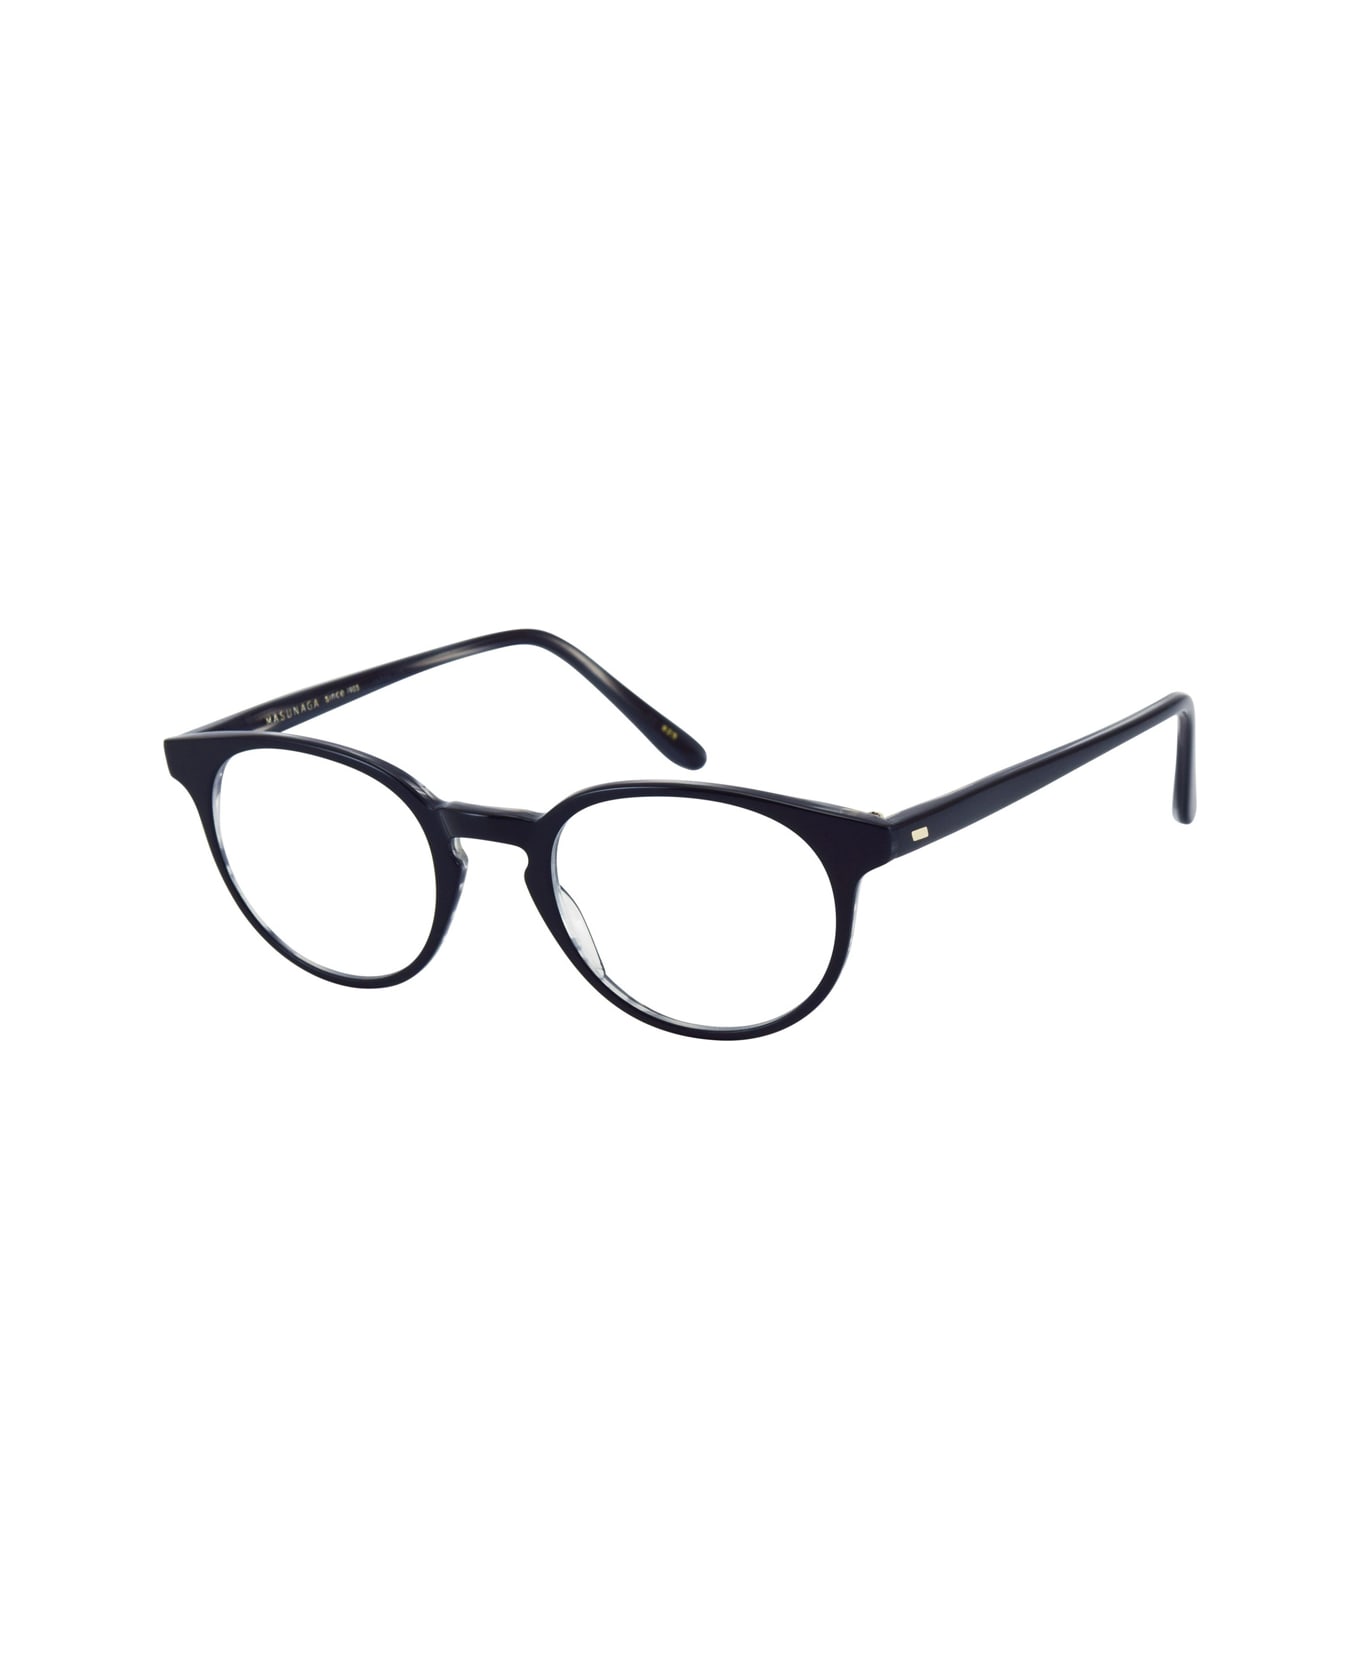 Masunaga 11ds4bl0a Glasses - Nero アイウェア